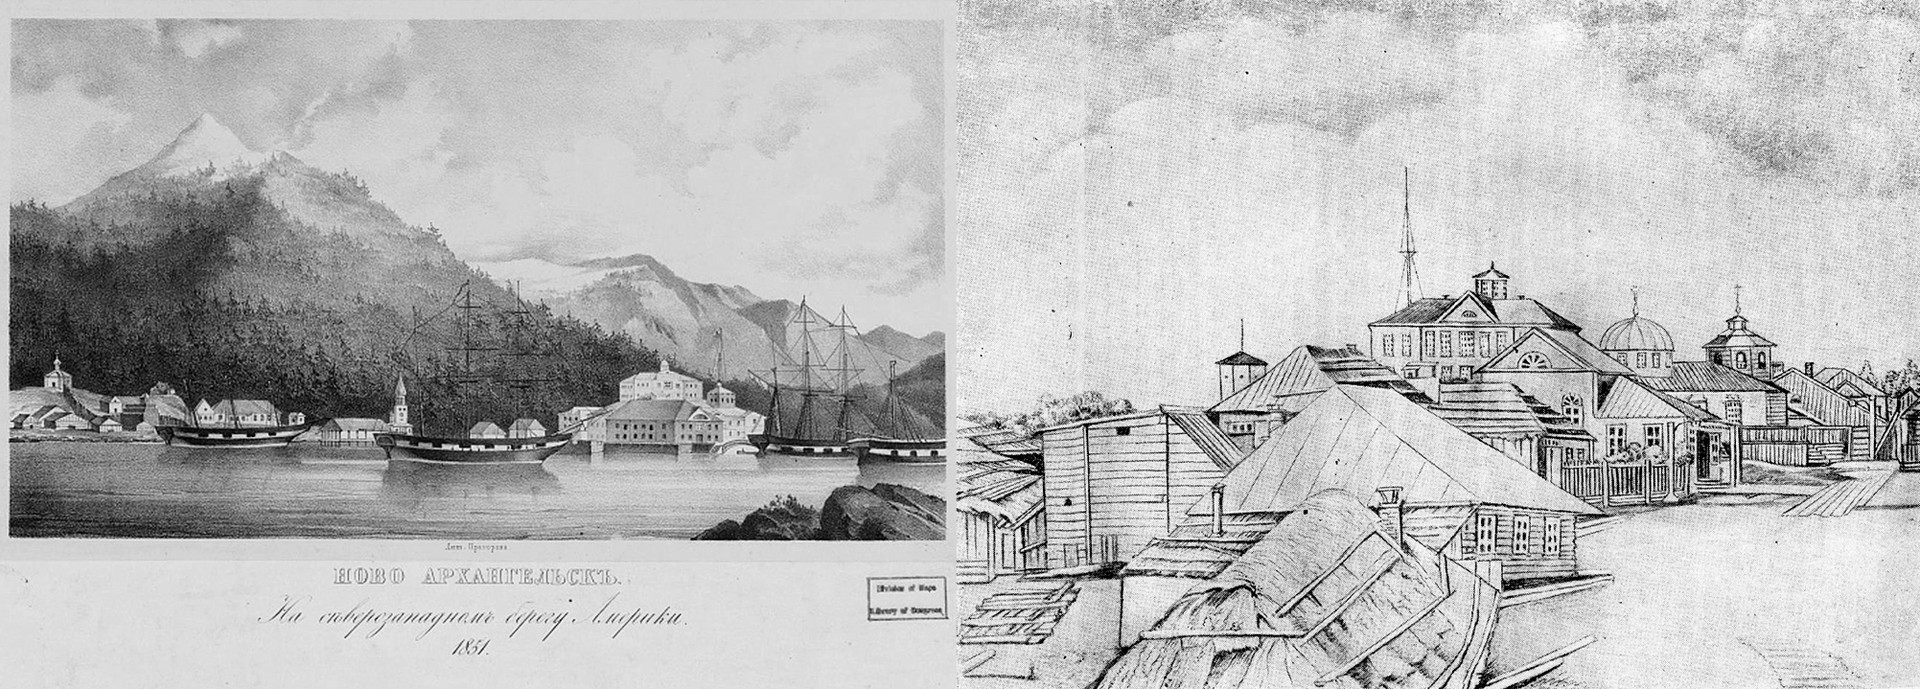 Novo Arkhangel'sk. On Northwest Coast Of America, 1851